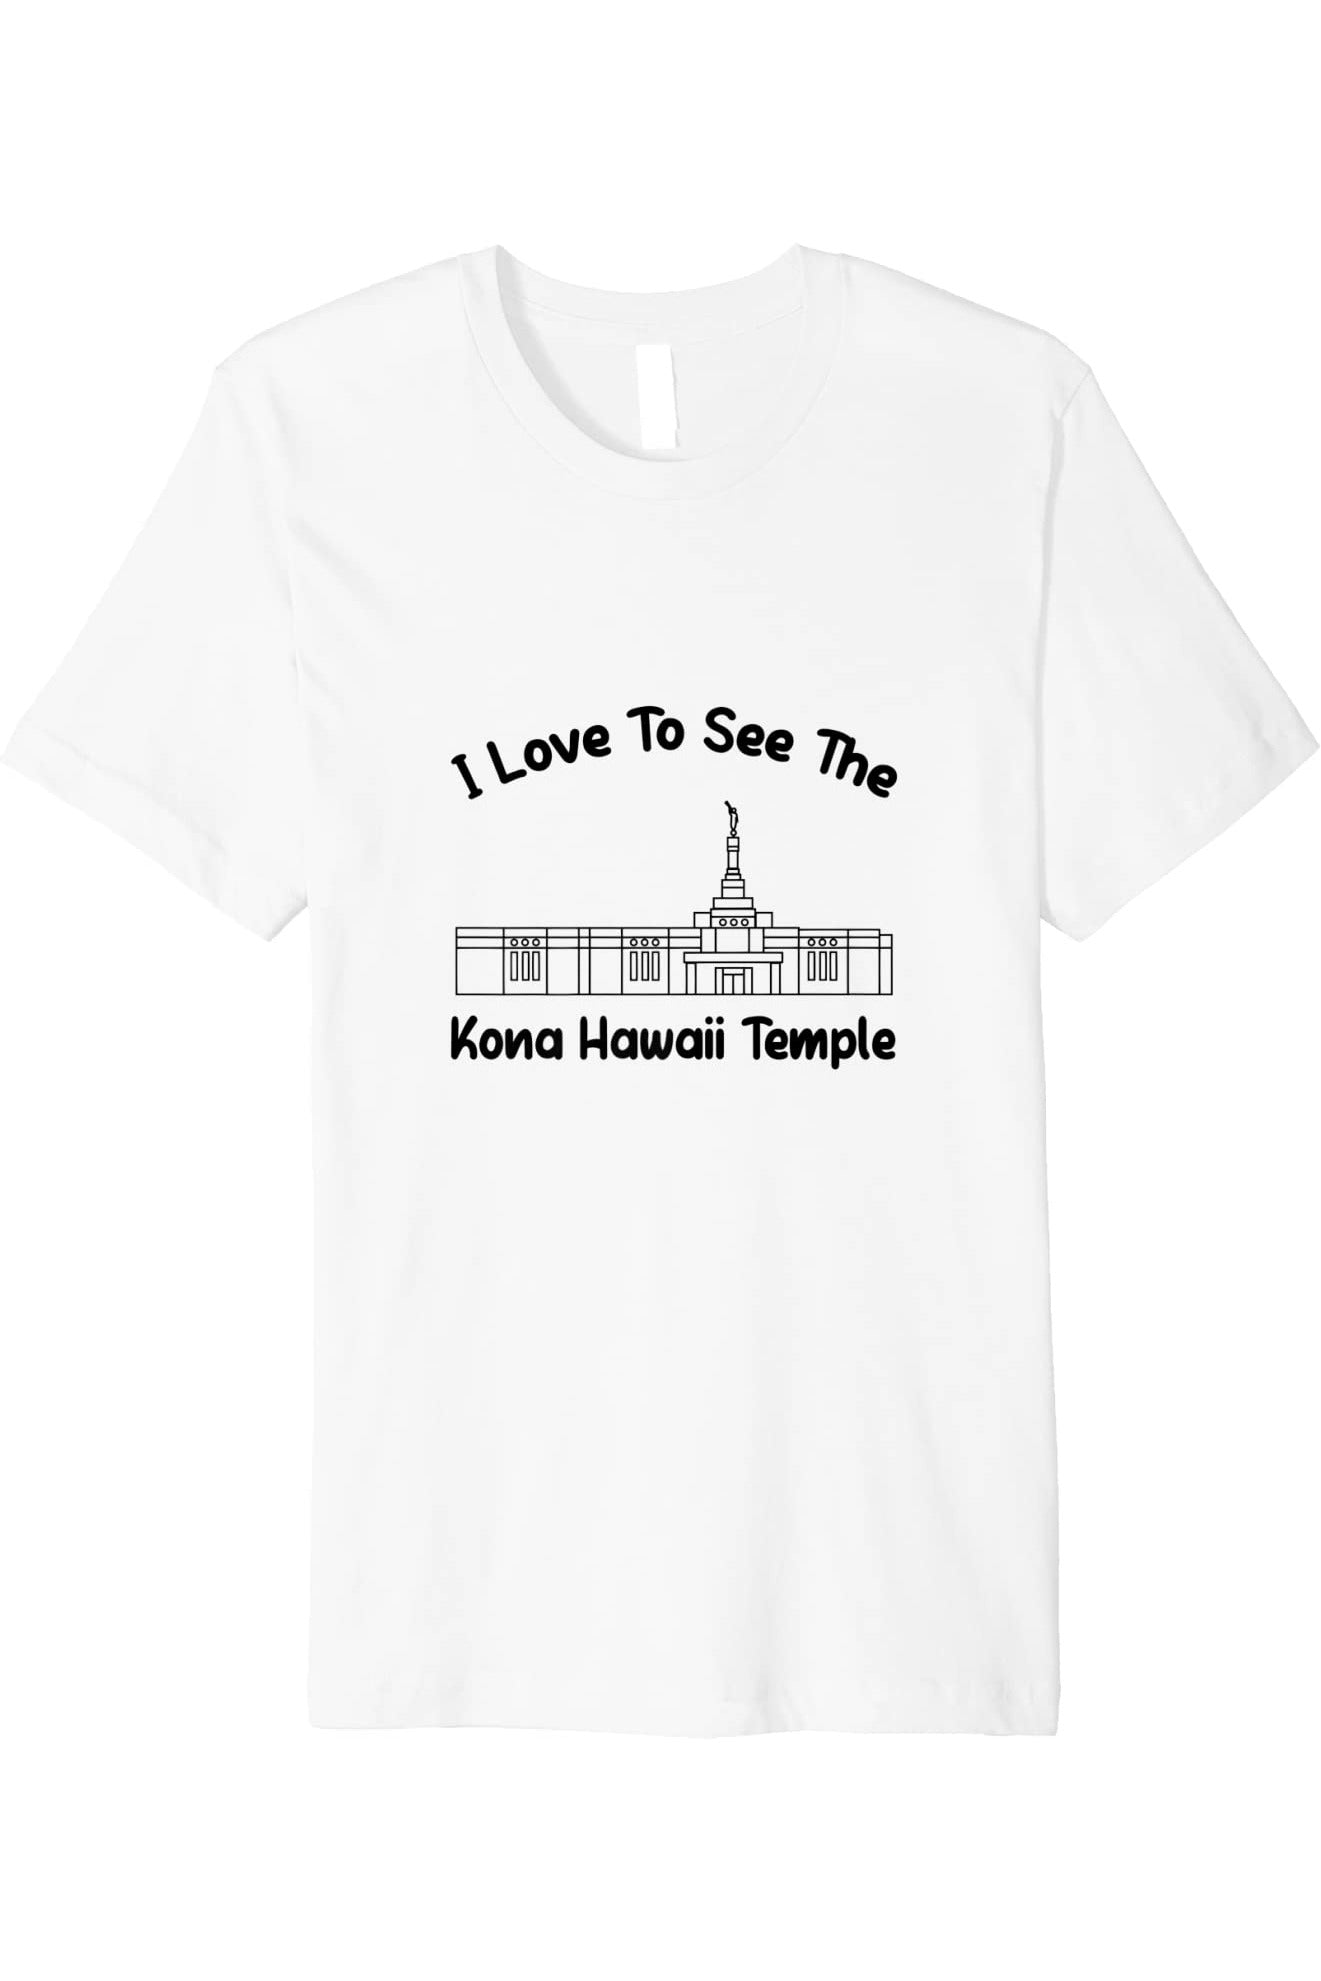 Kona Hawaii Temple T-Shirt - Premium - Primary Style (English) US